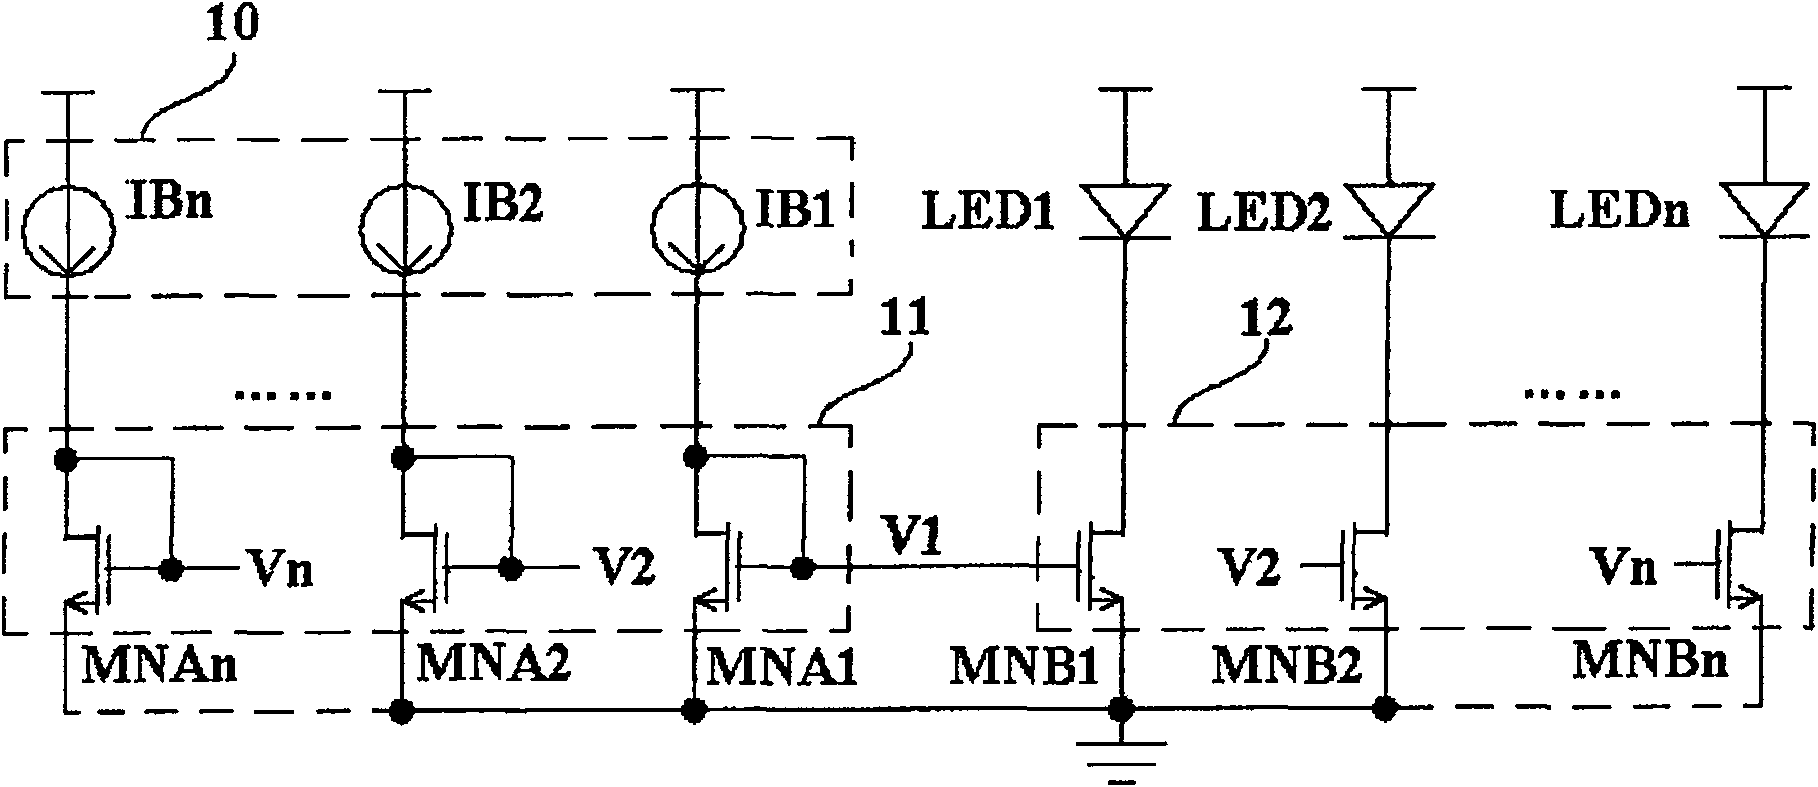 Multi-path LED drive circuit